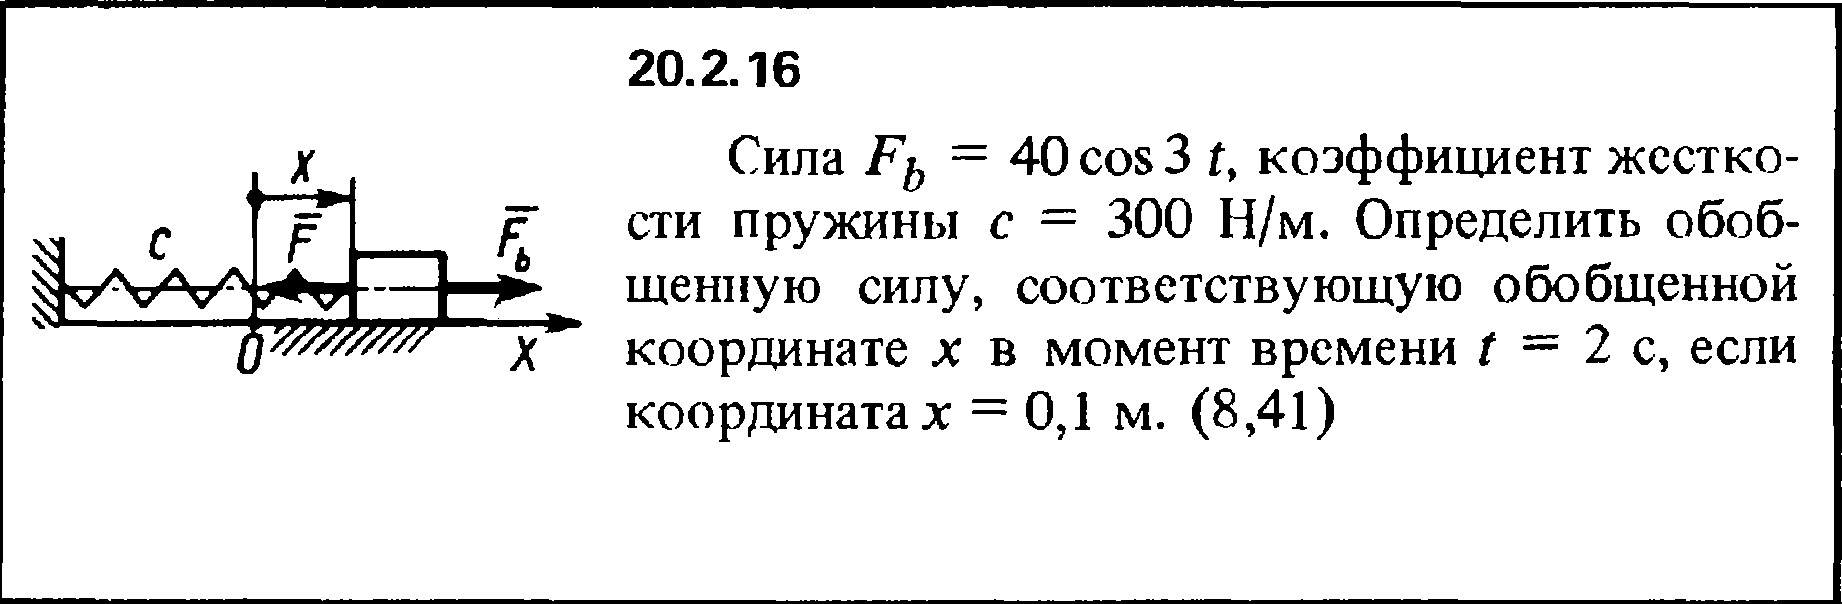 Решение 20.2.16 из сборника (решебника) Кепе О.Е. 1989